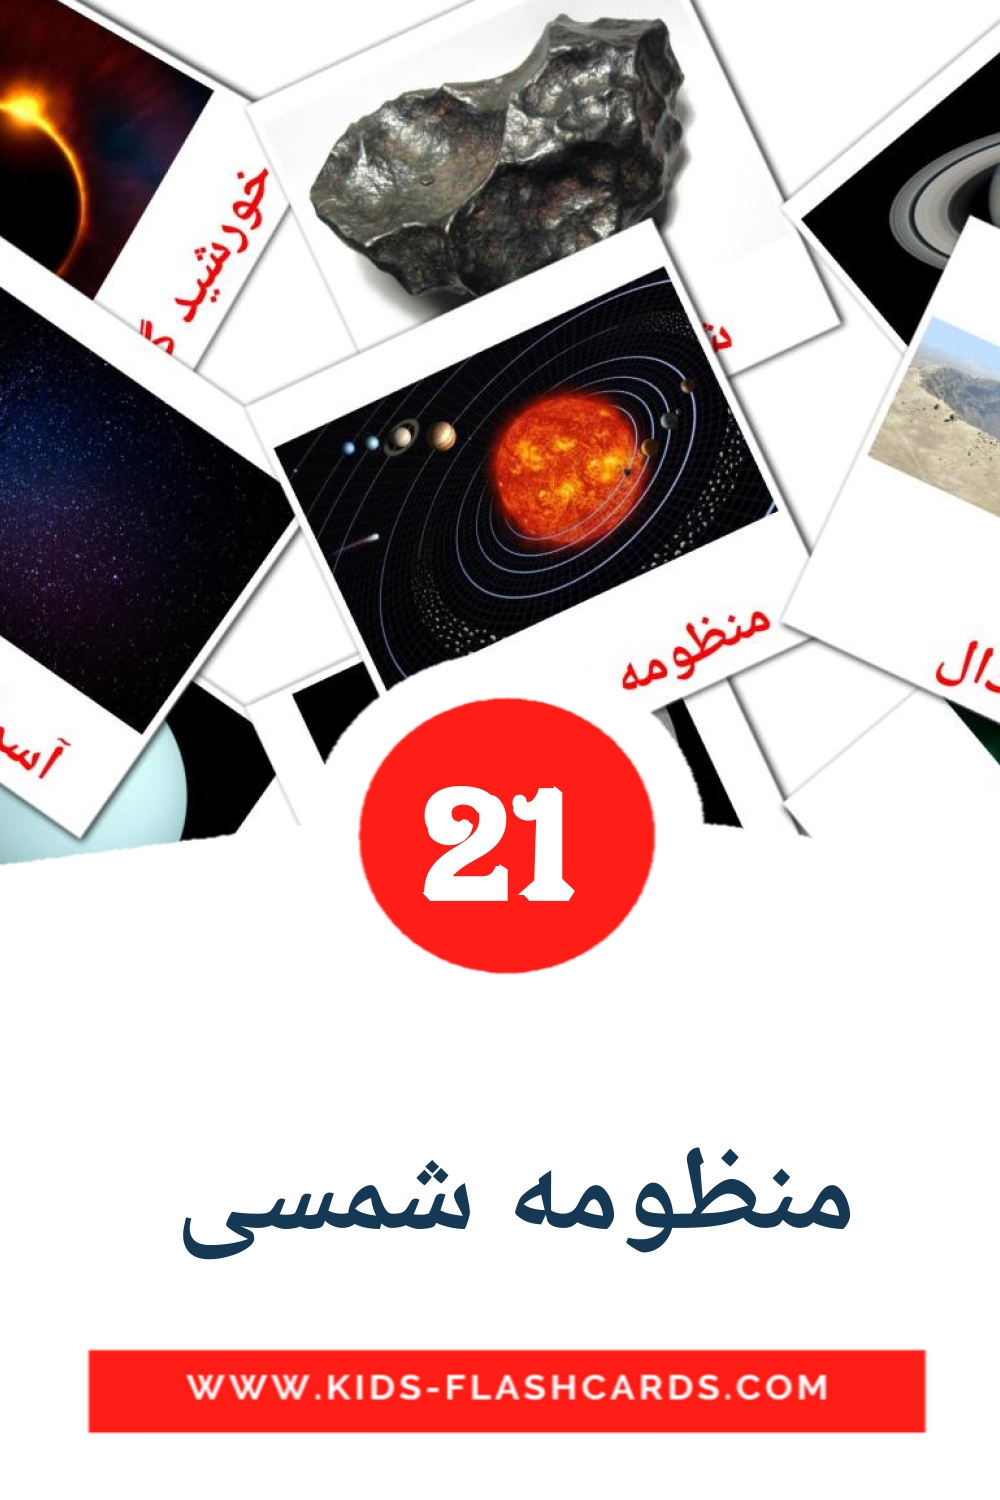 21 منظومه شمسی  Bildkarten für den Kindergarten auf Persisch